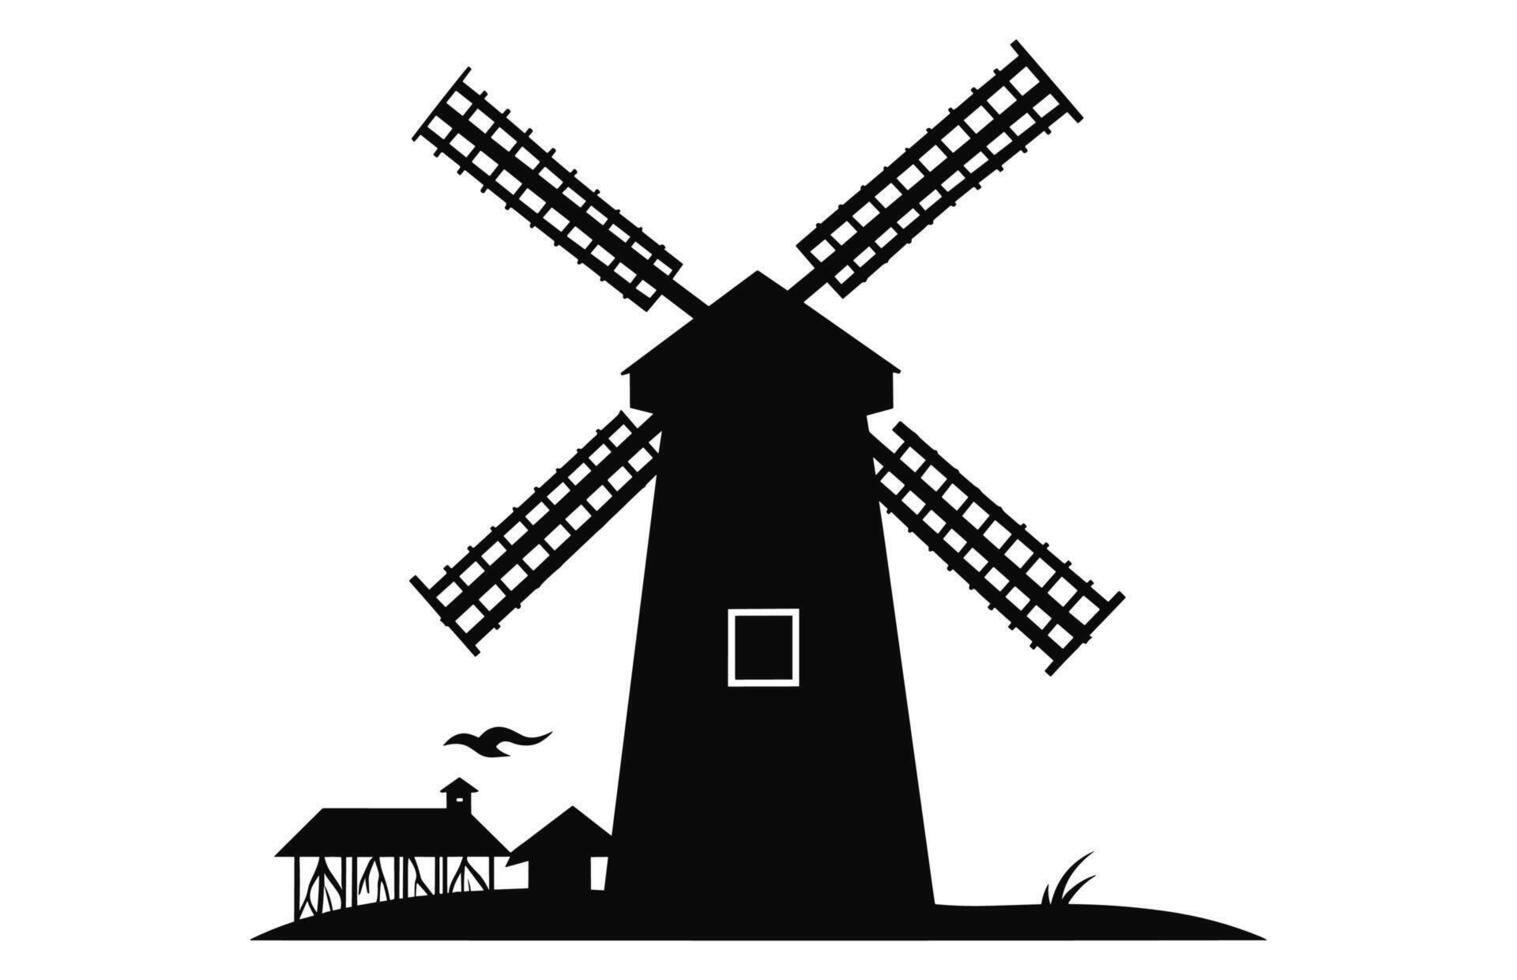 Old Farm Windmill black Silhouette Vector